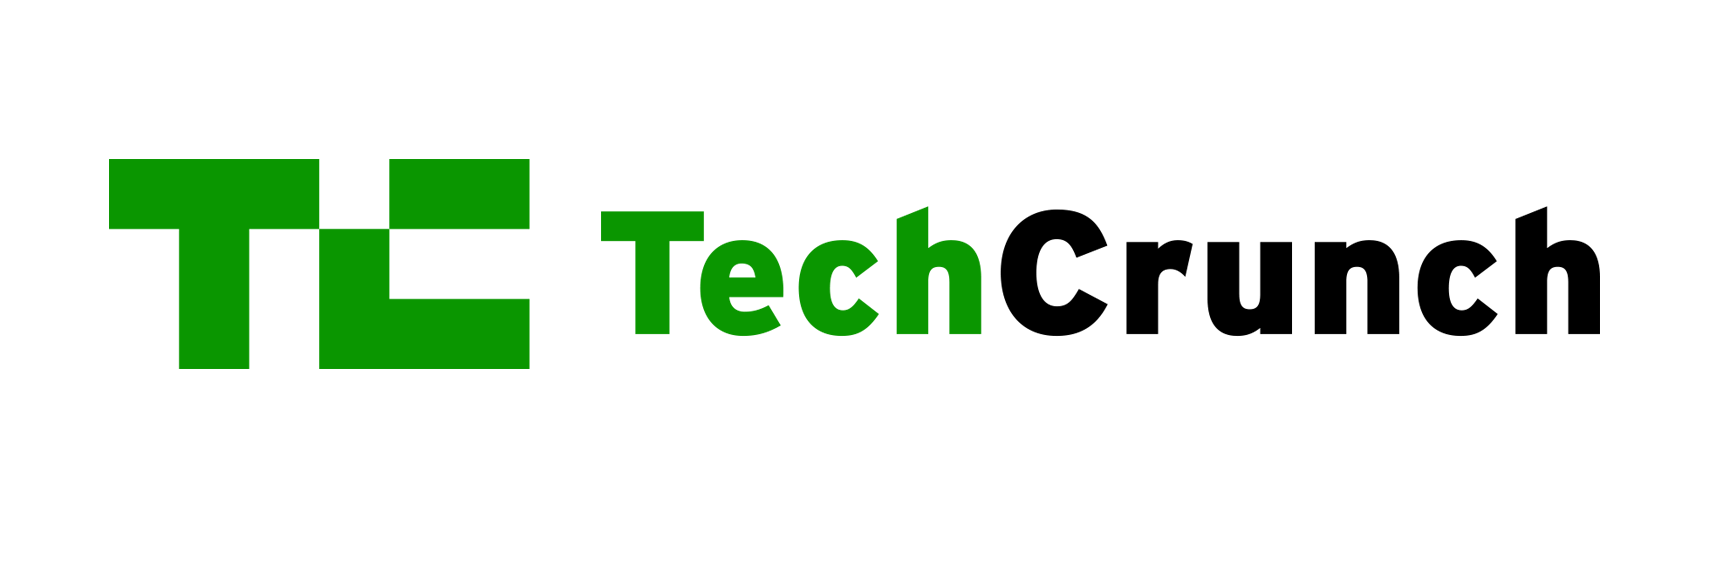 Tech Crunch logo